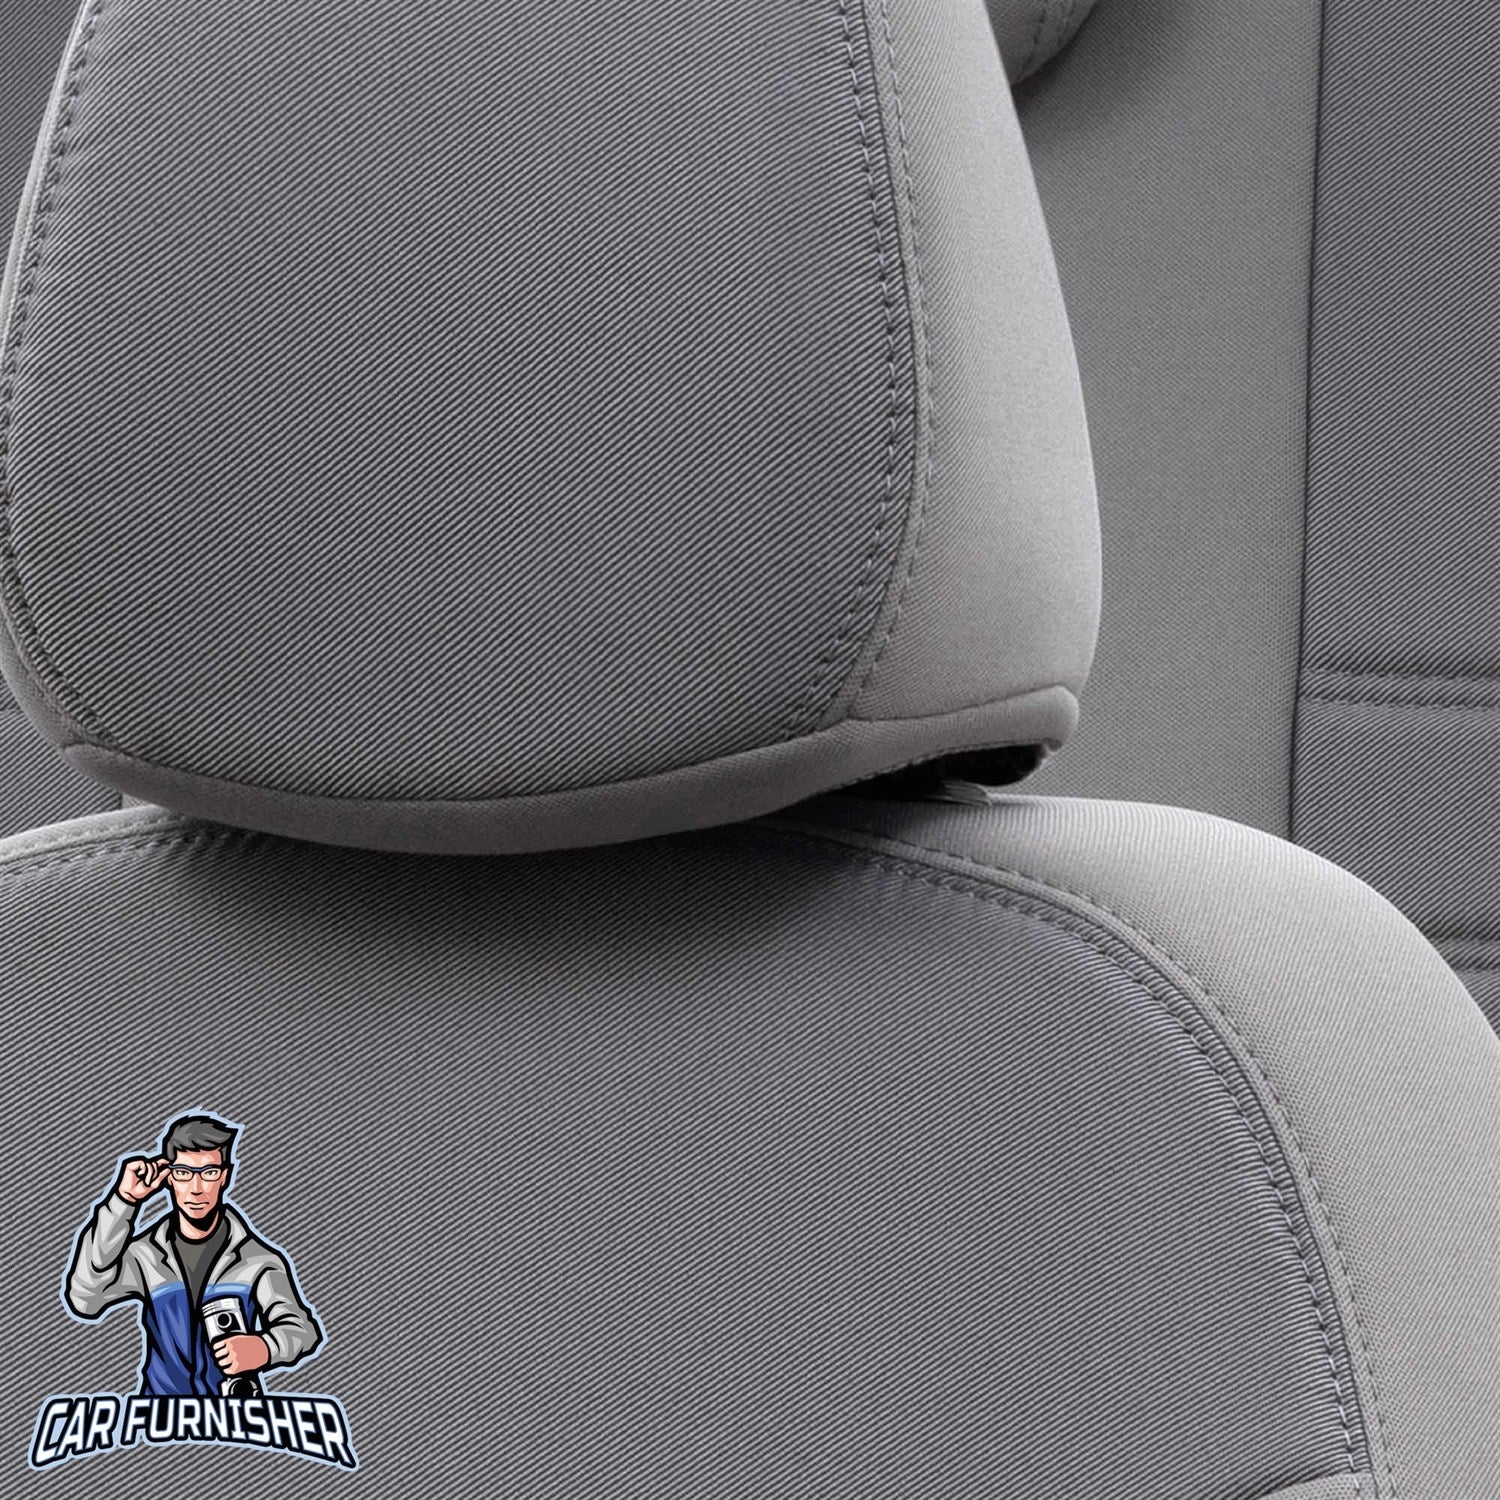 Kia Ceed Seat Covers Original Jacquard Design Gray Jacquard Fabric